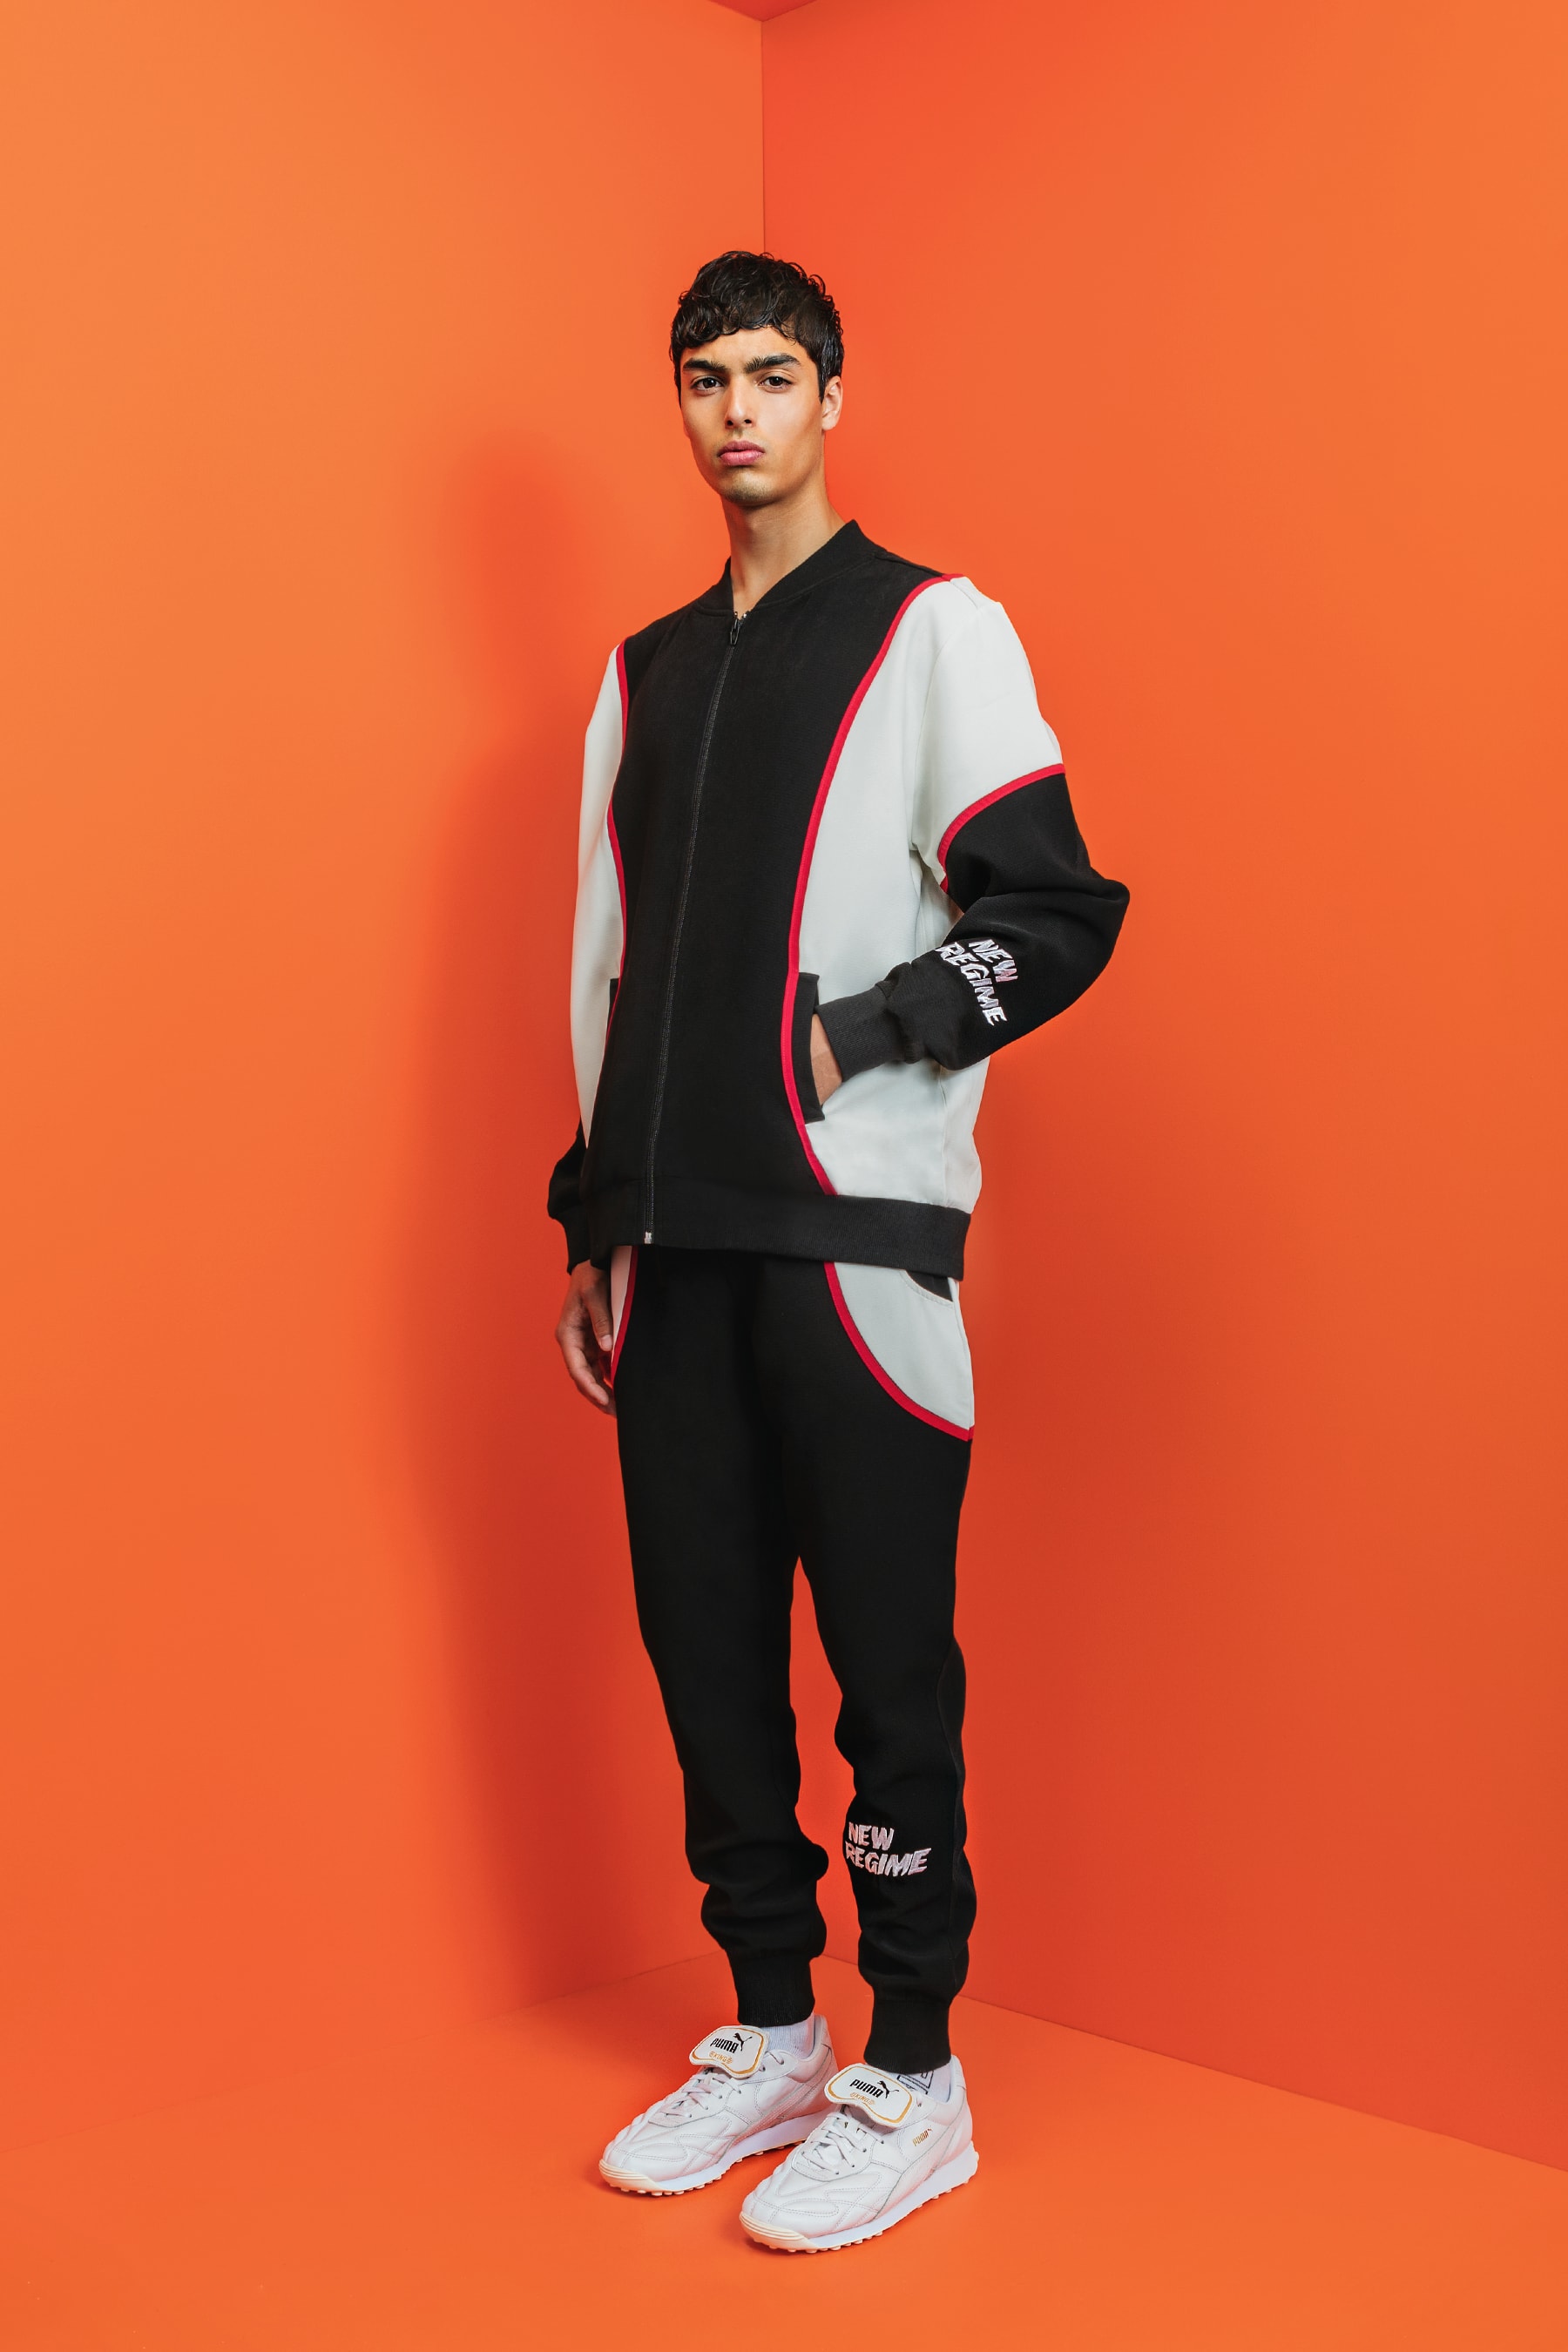 Atelier New Regime Play to Win Collection lookbook release info sportswear